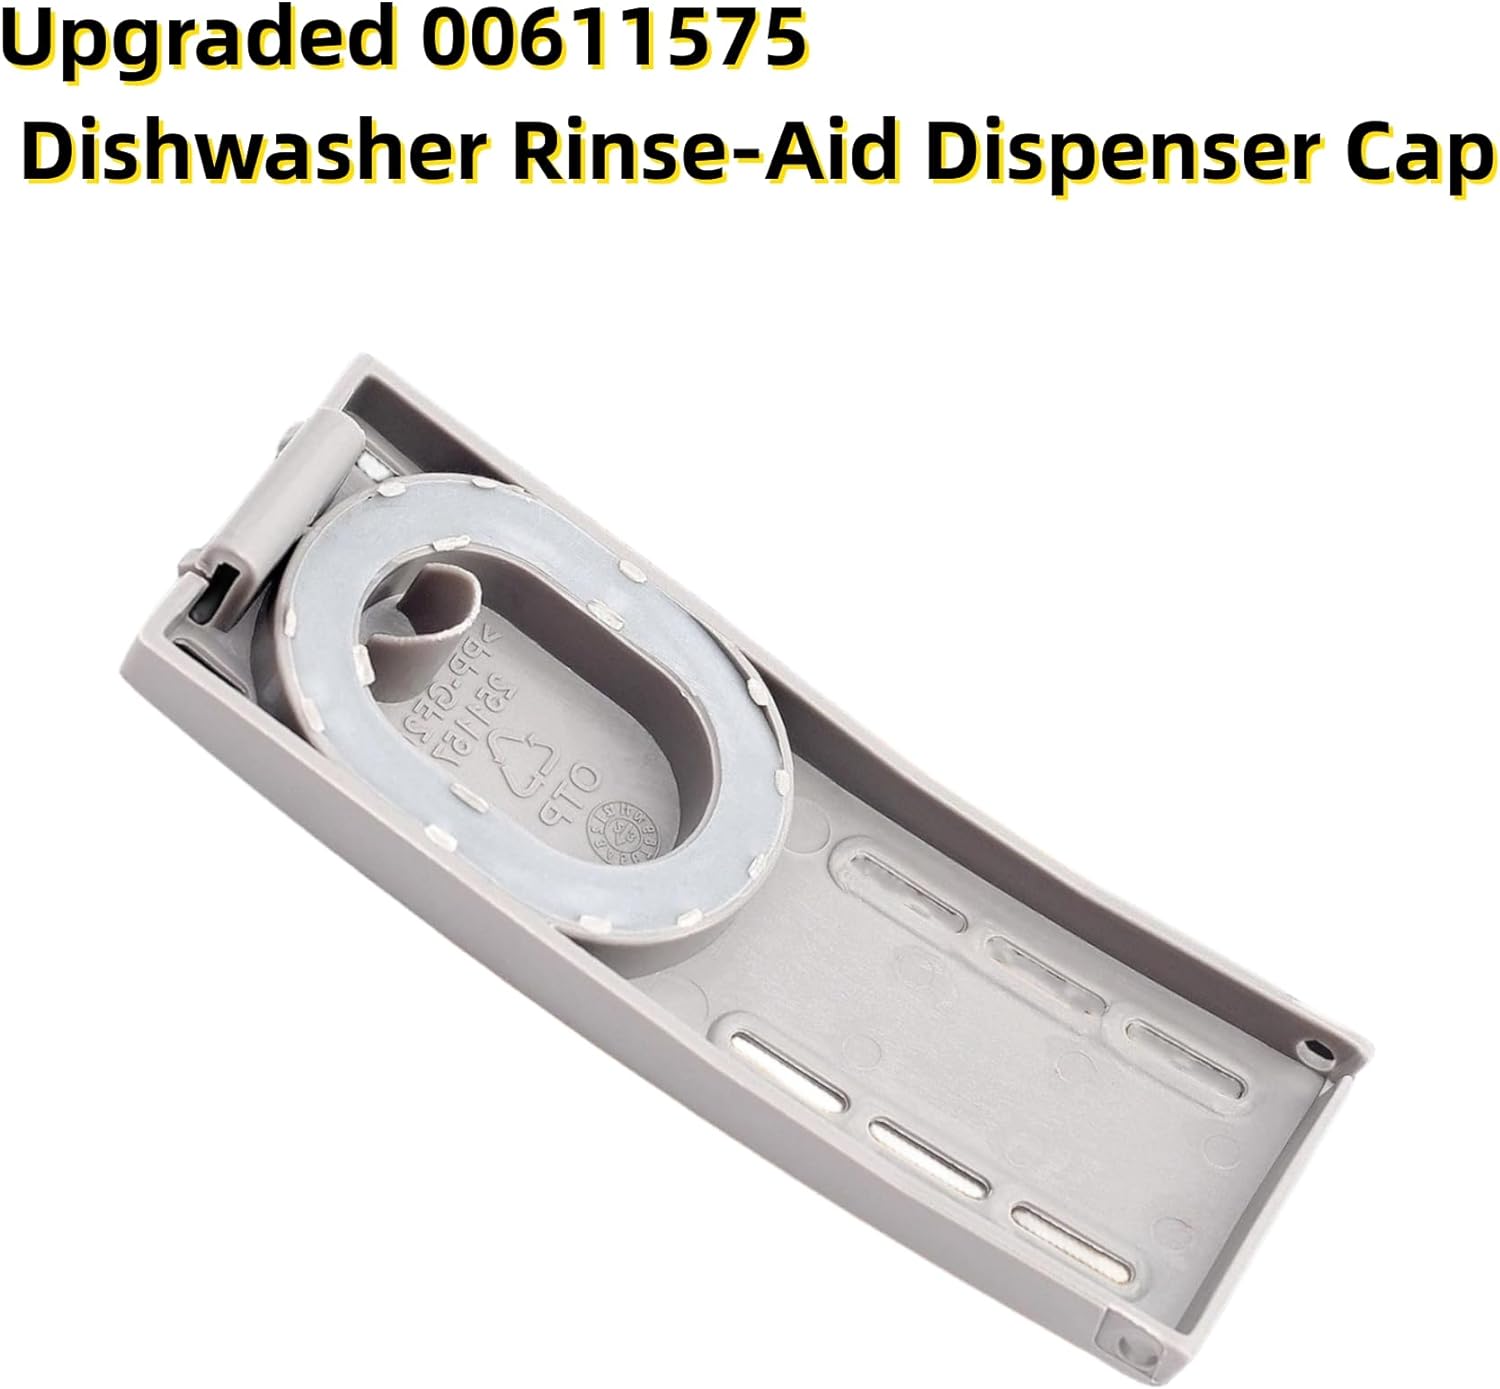 Upgraded 00611575 Dishwasher Rinse-Aid Dispenser Cap Original Equipment Manufacturer Replacement Part : Health & Household